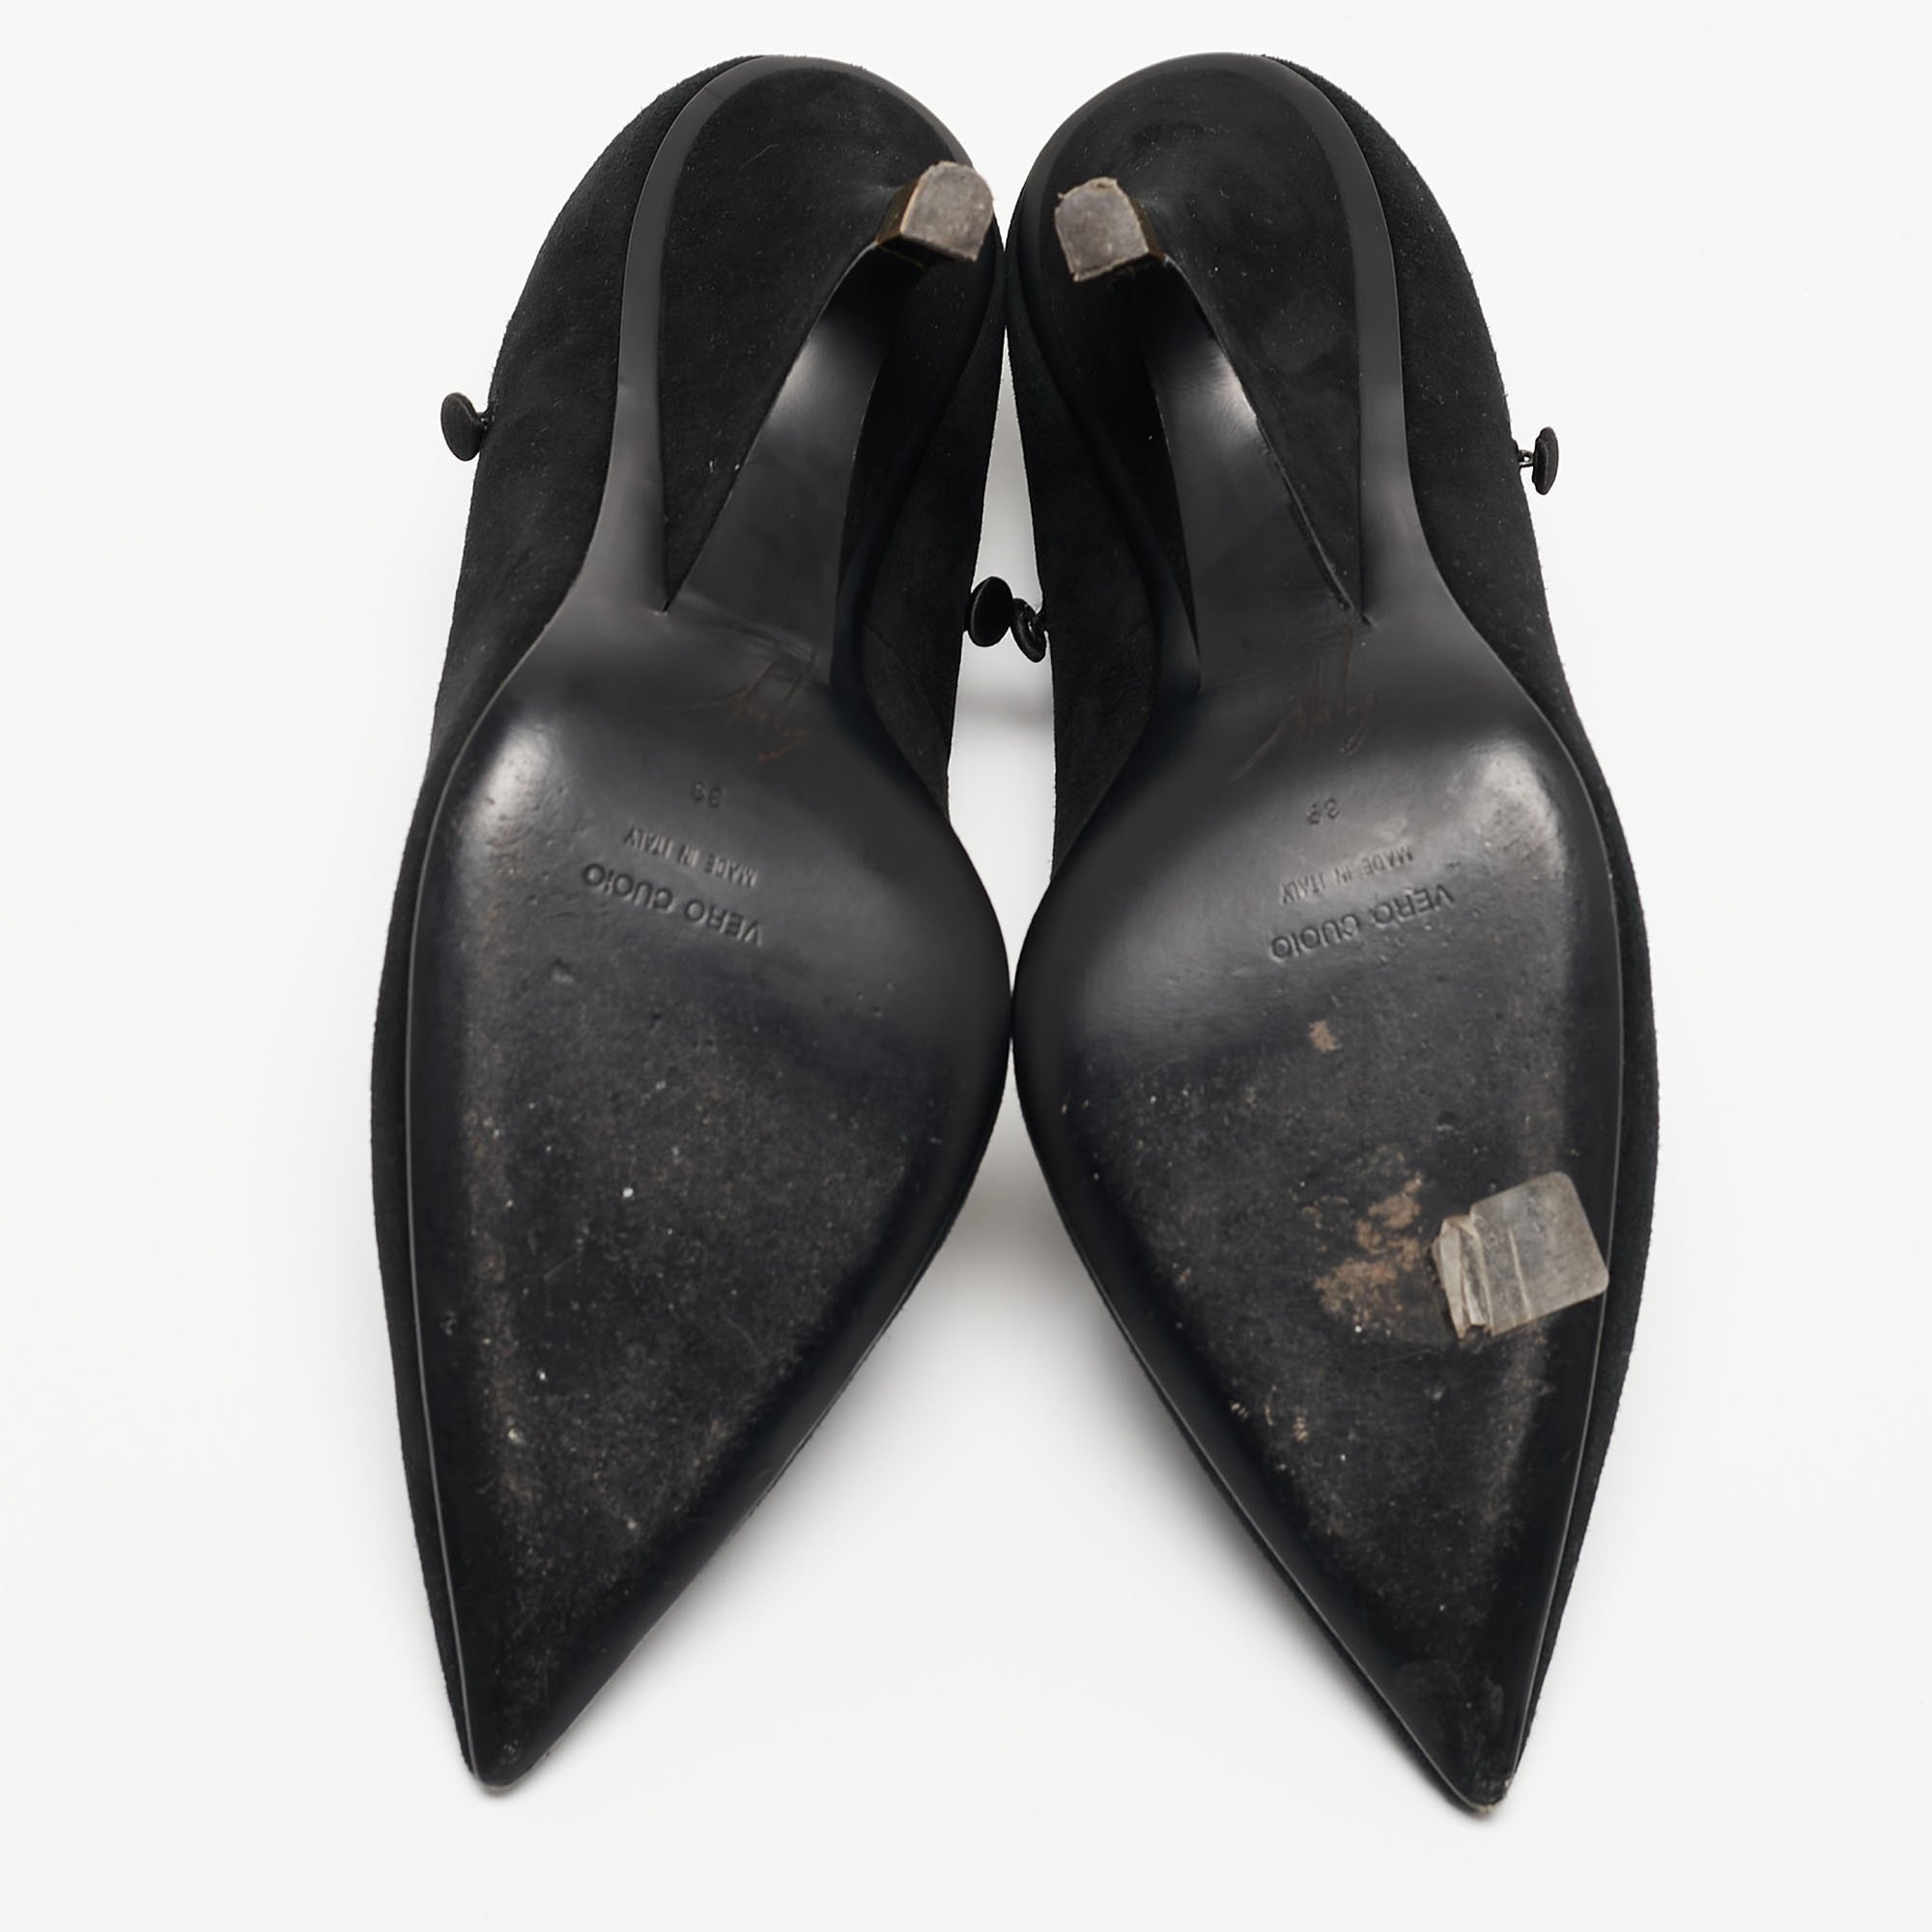 Giuseppe Zanotti Black Suede Pointed Toe Pumps Size 39